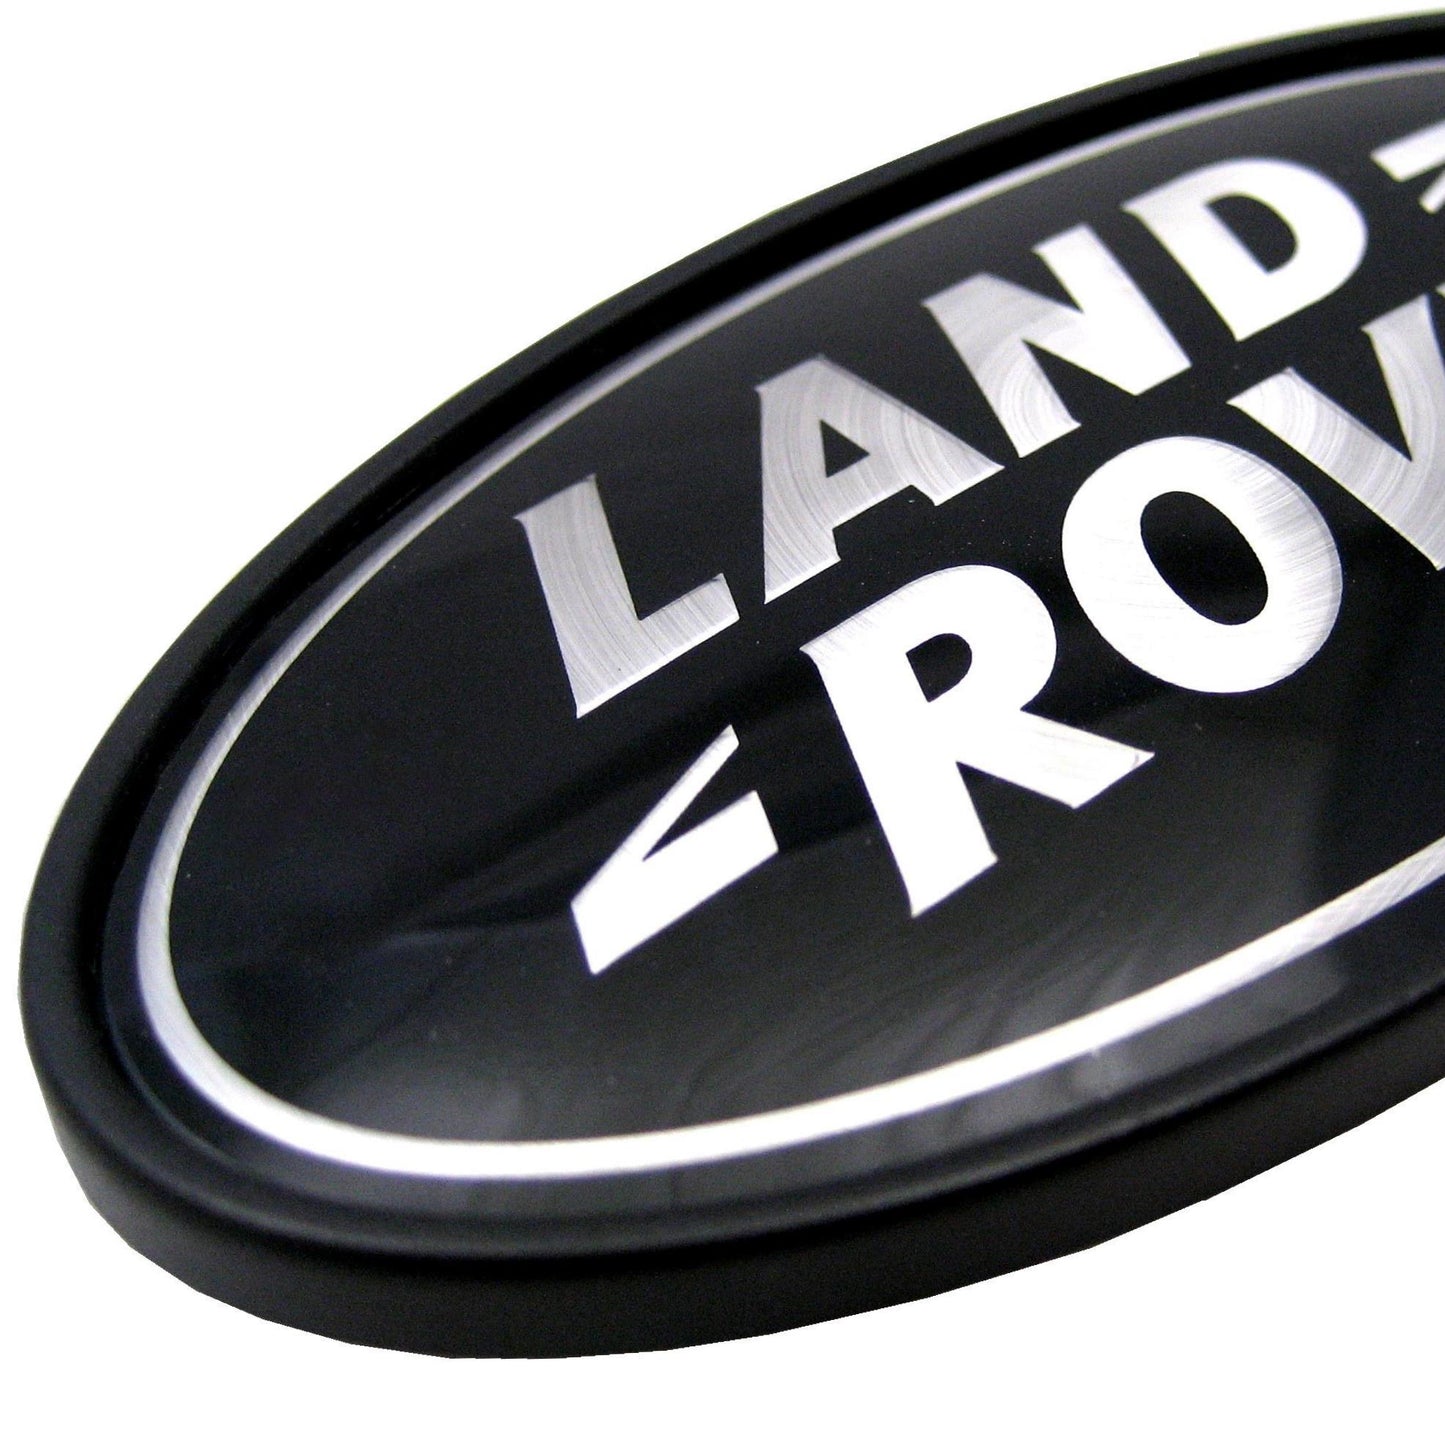 Genuine Rear Tailgate Badge - Black & Silver - for Range Rover Classic